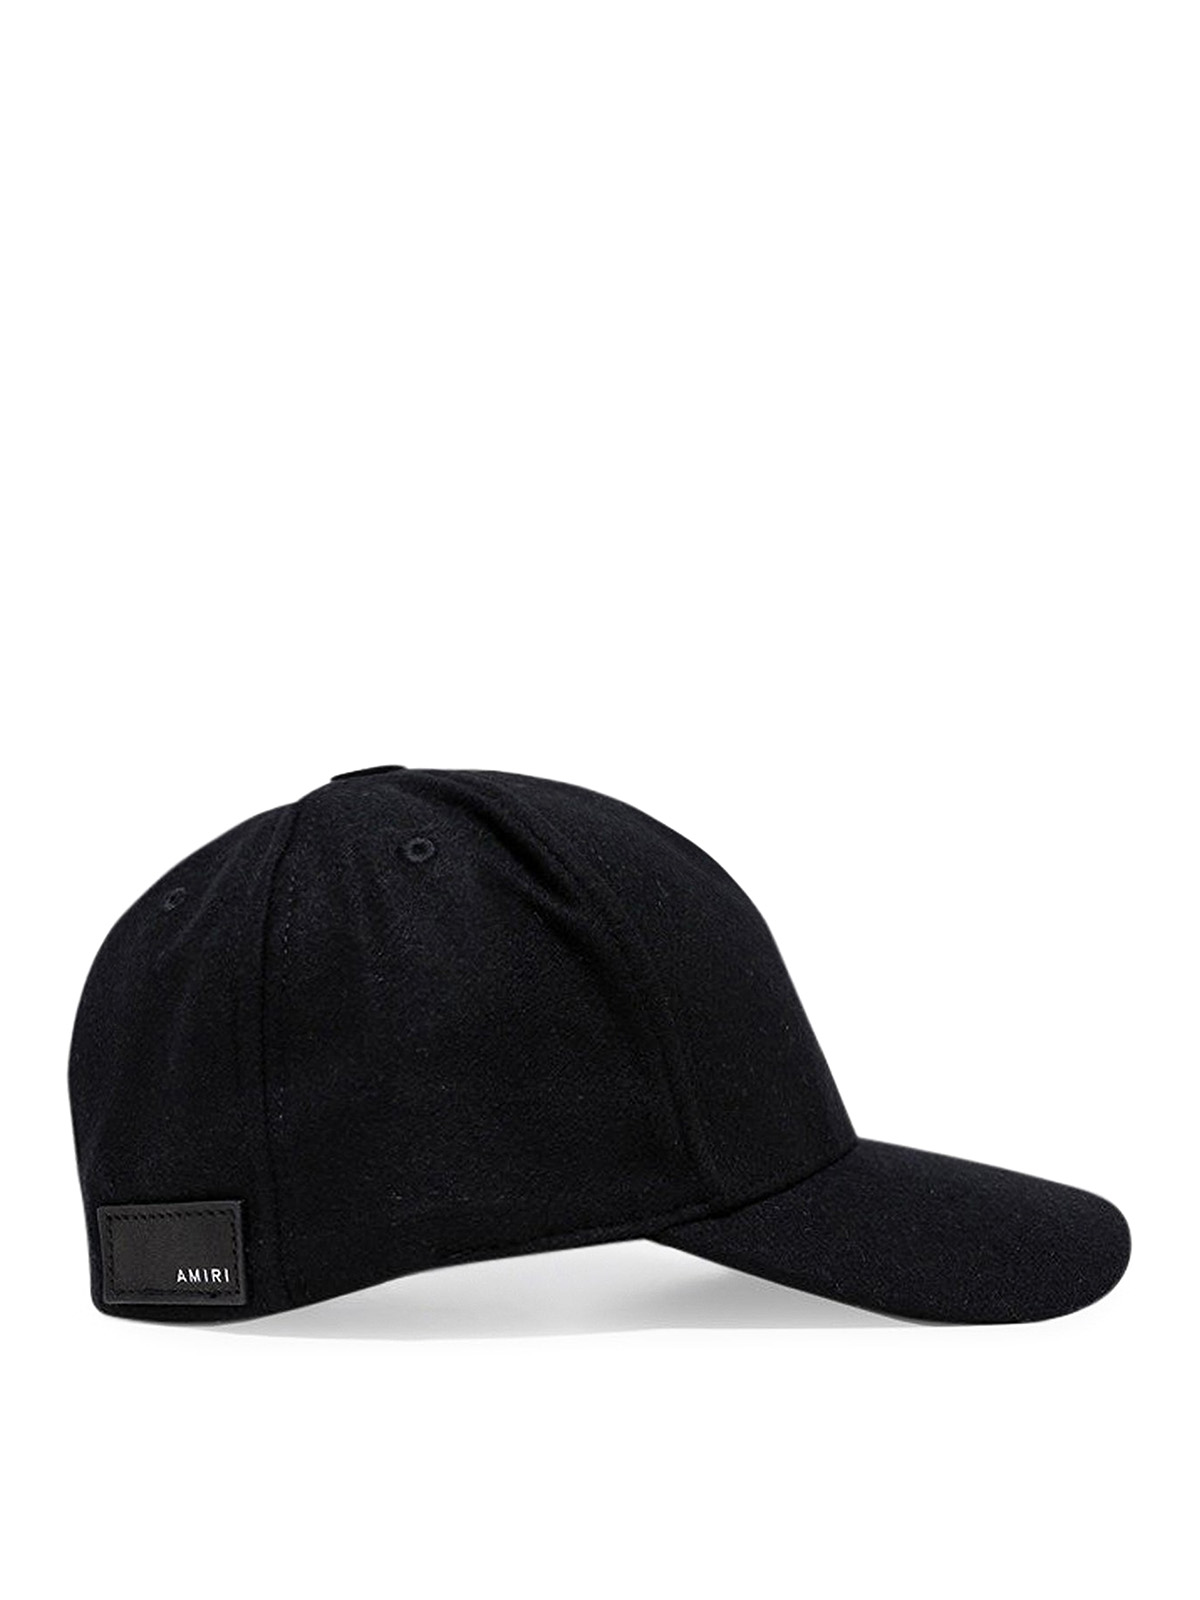 Hats and caps Amiri - Wool baseball cap